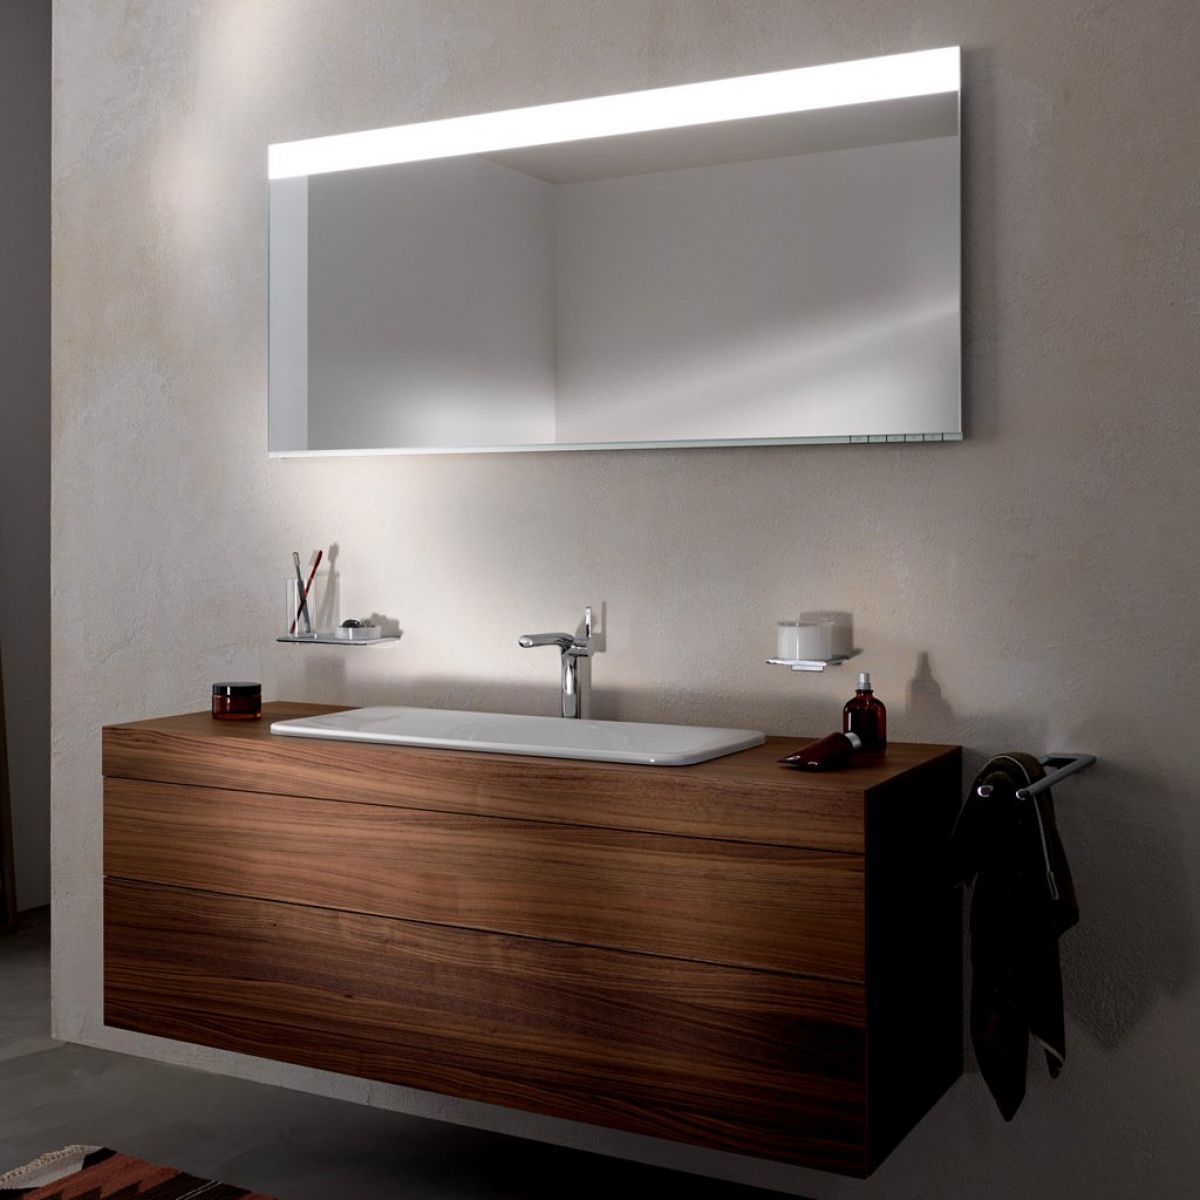 image example of luxury bathroom furniture